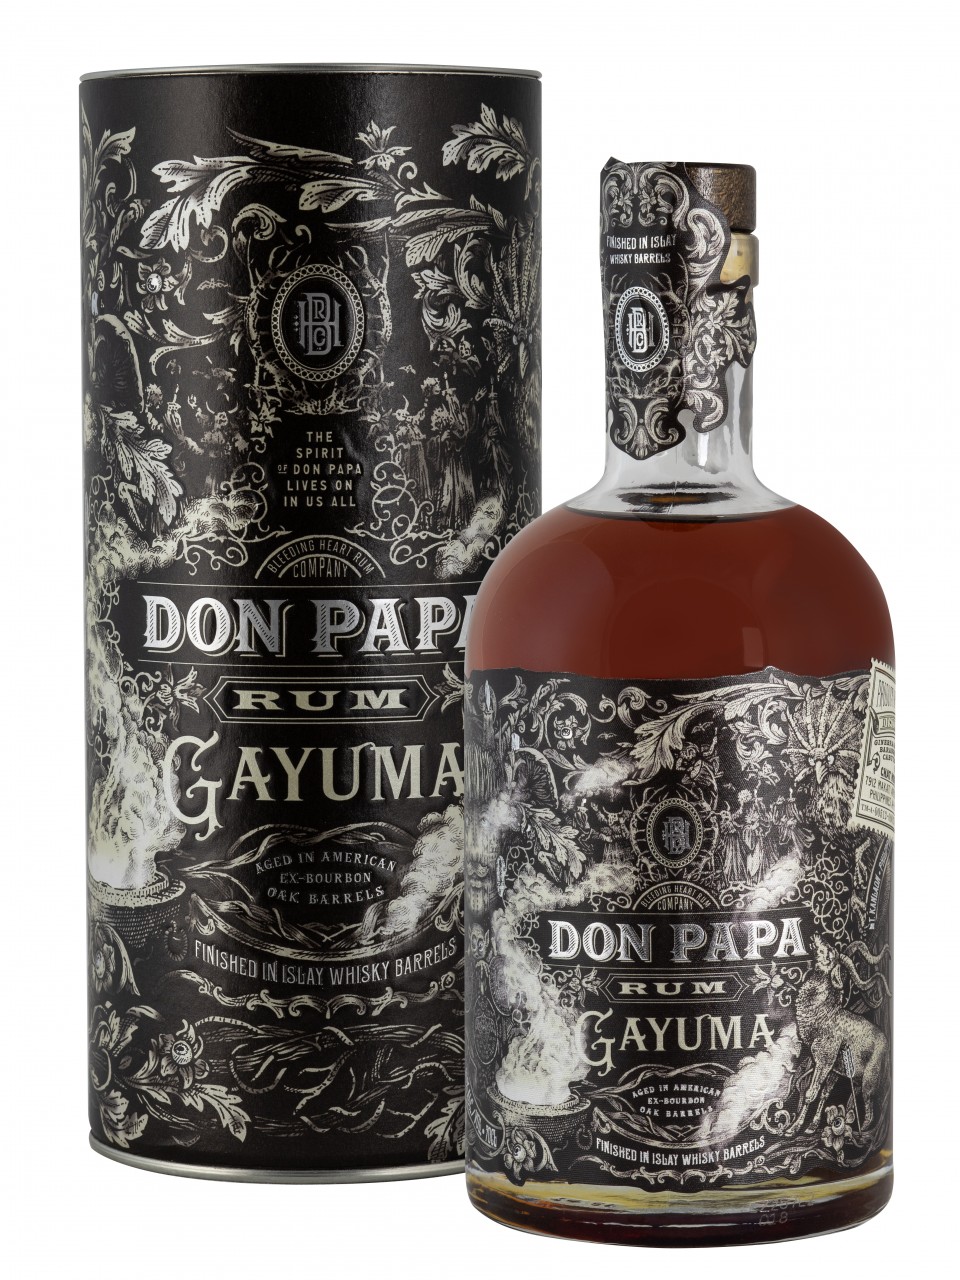 Don Papa Rum Gayuma 0,7l 43% ab 84,90 € im Preisvergleich kaufen